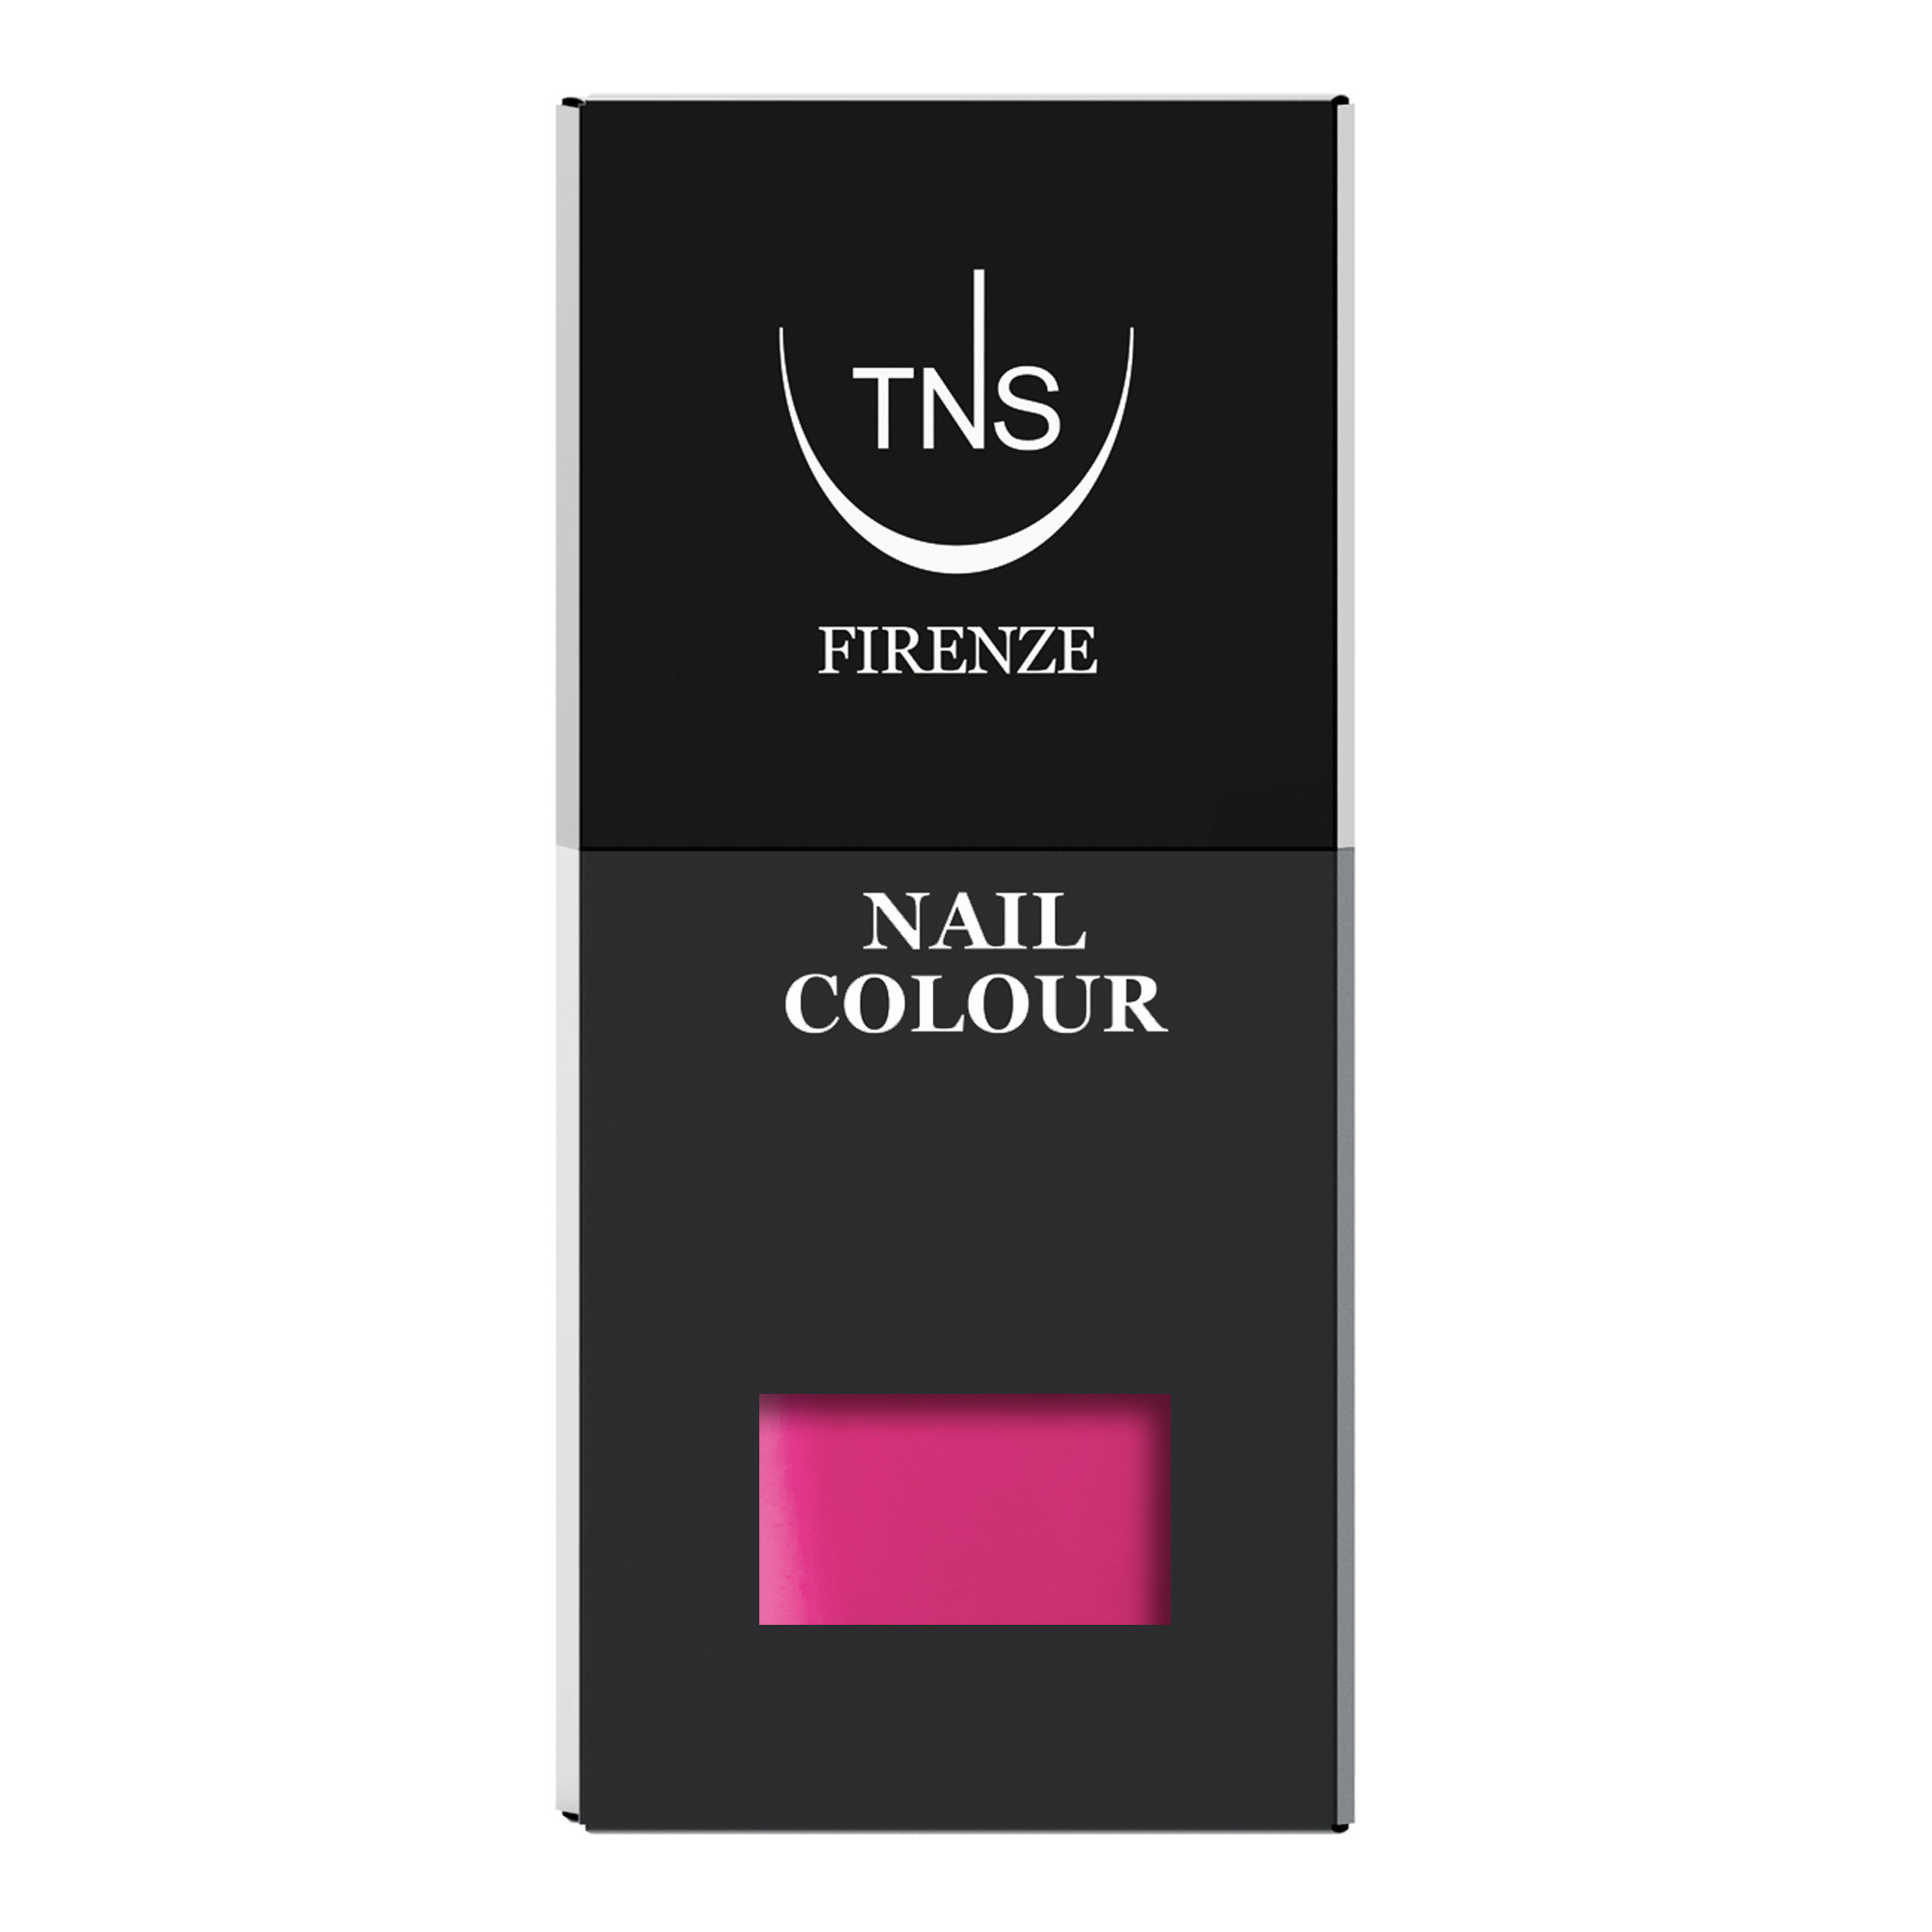 Nail polish Venere dark pink 10 ml TNS